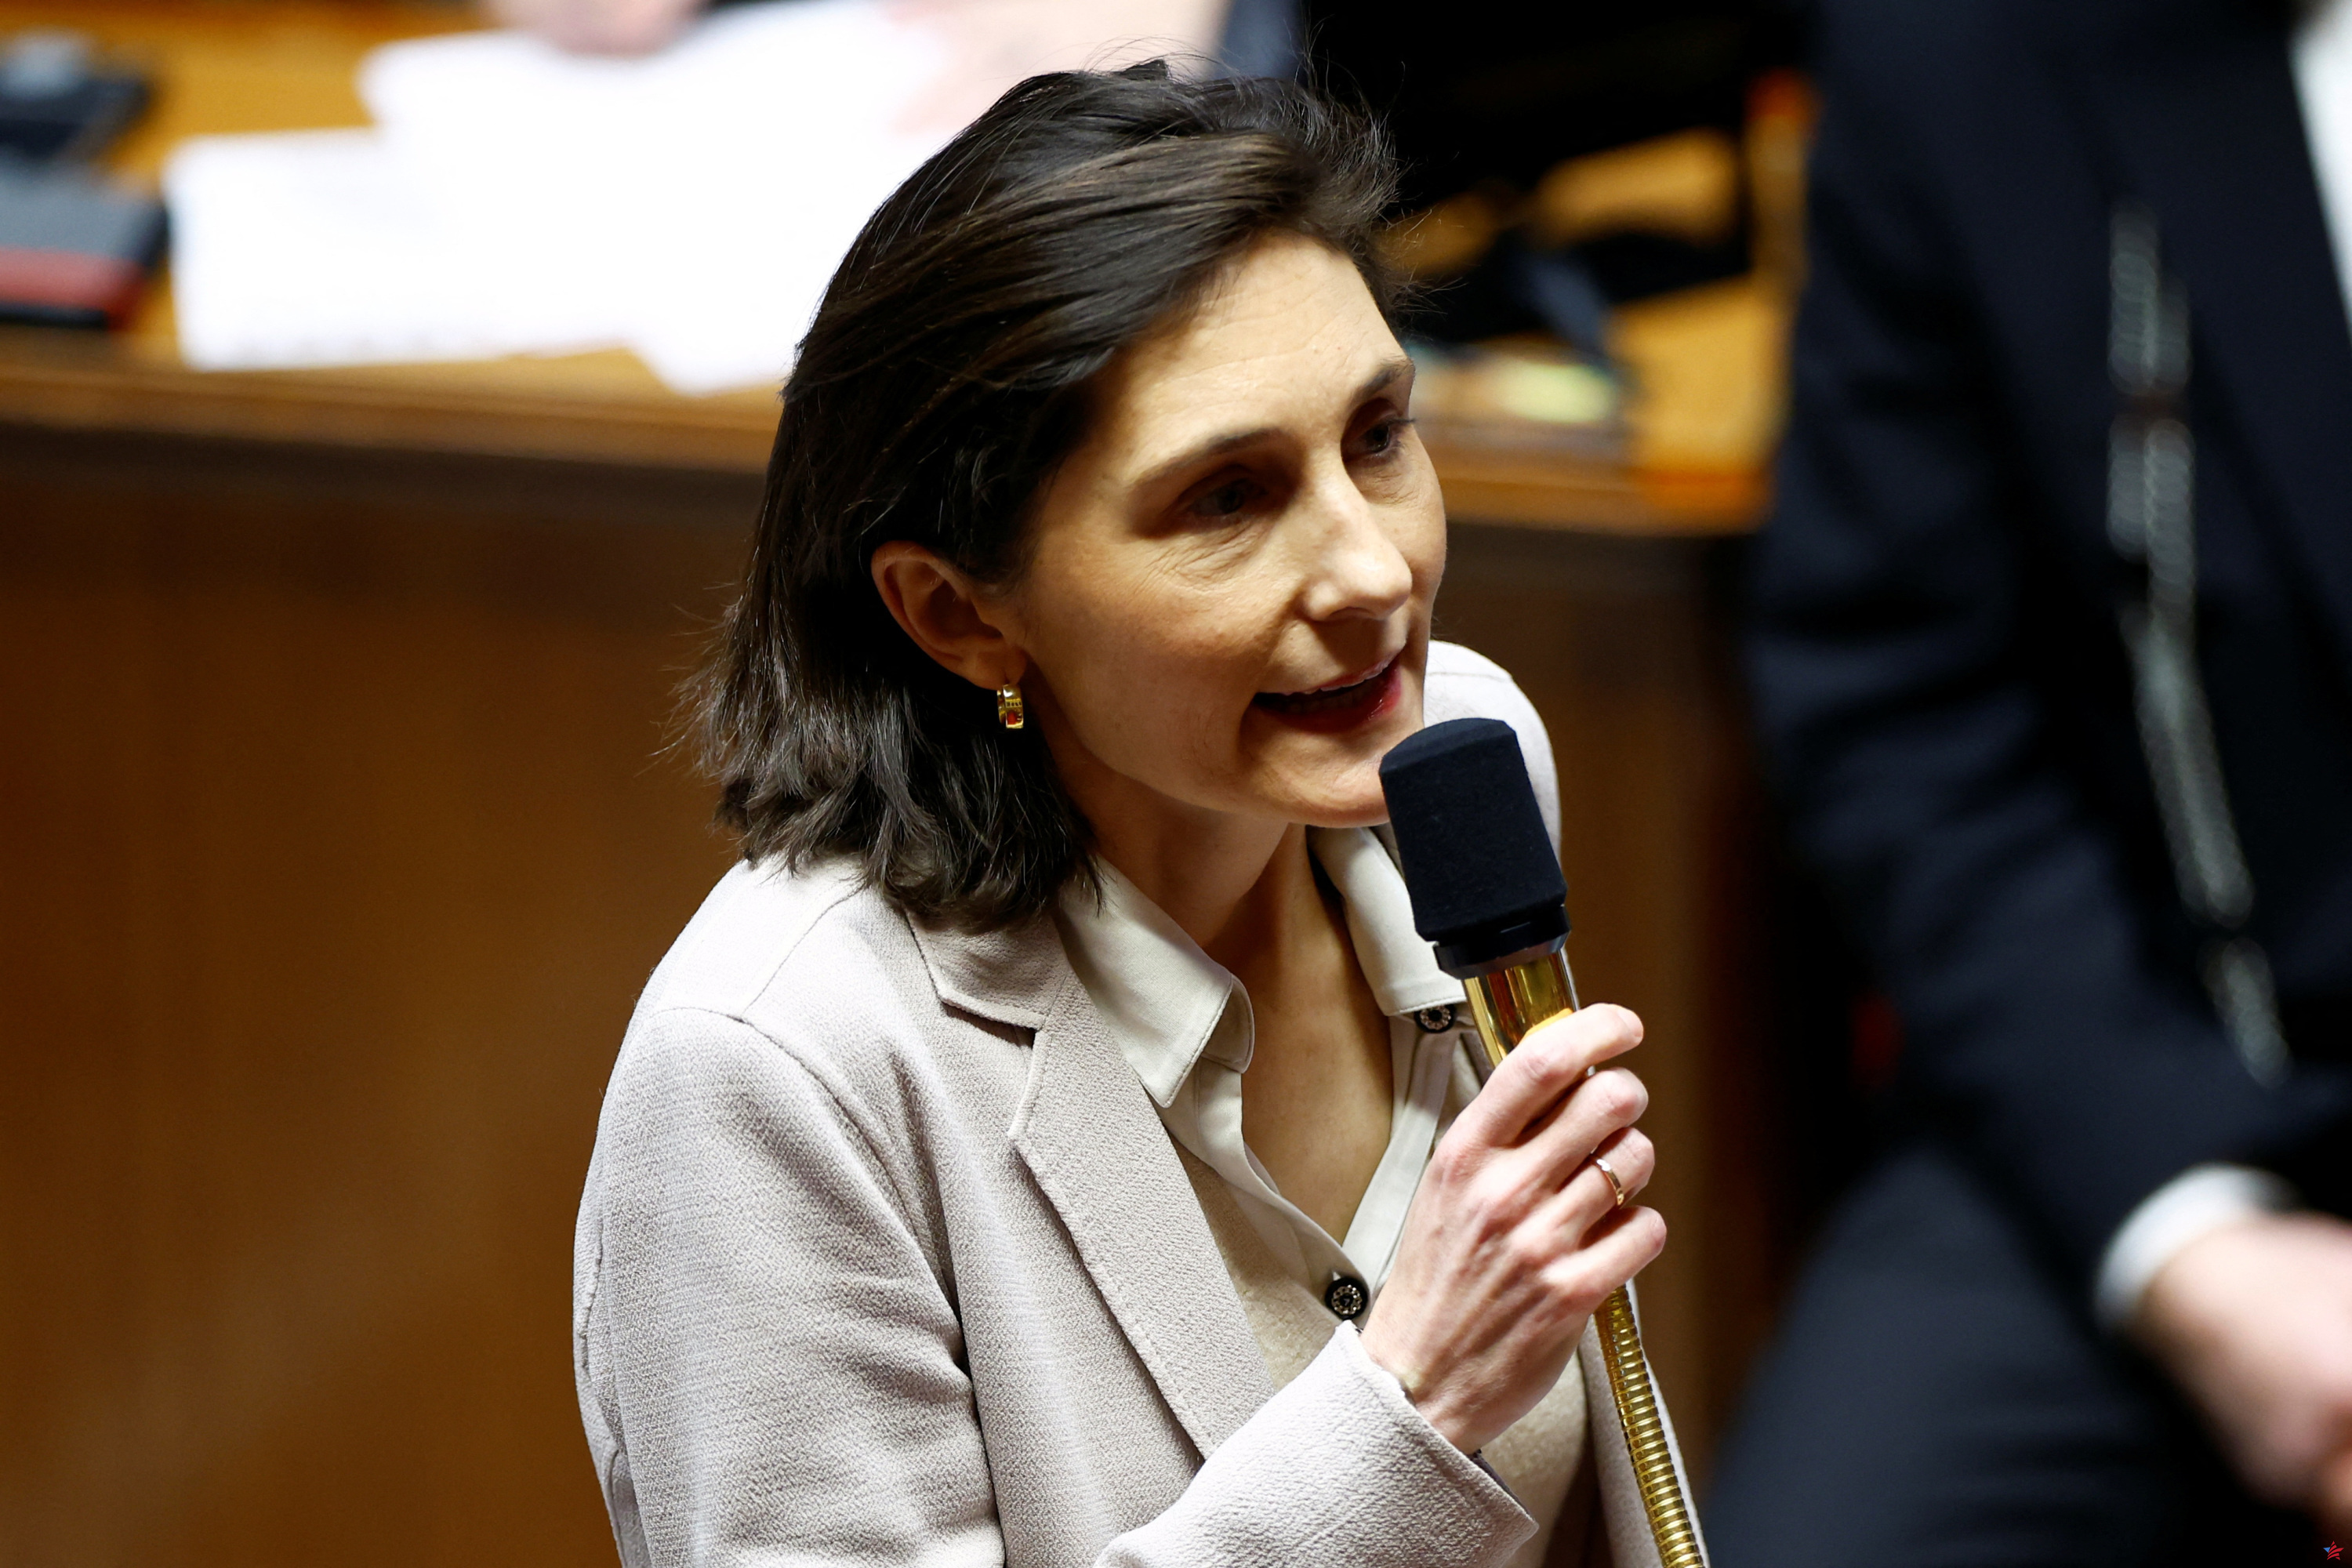 Educación: Amélie Oudéa-Castéra “tuvo razón al pedir disculpas” tras su “comentario torpe”, según Emmanuel Macron